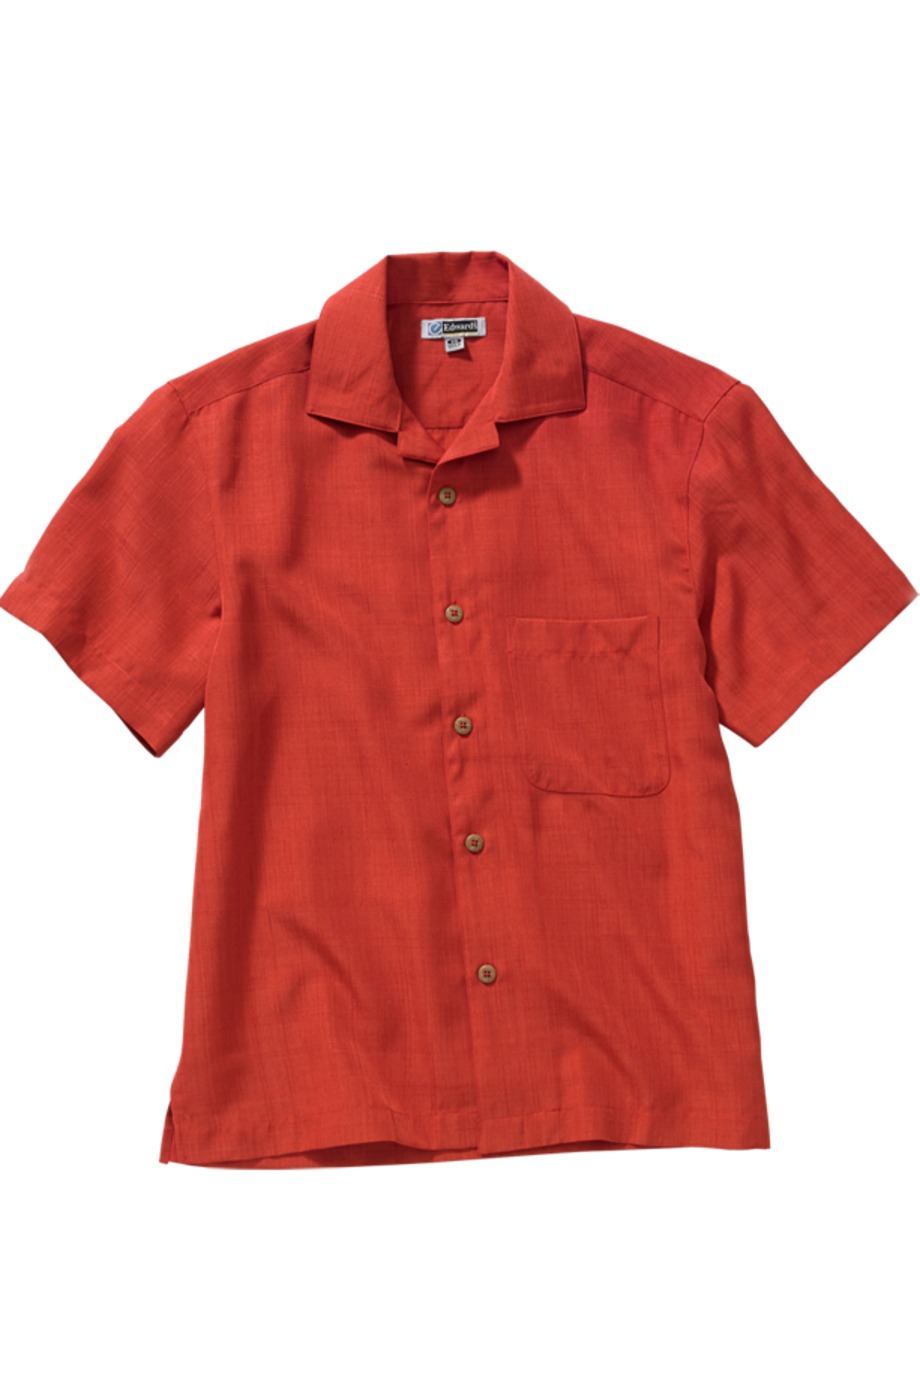 Edwards Garment 1030 - Jacquard Batiste Camp Shirt